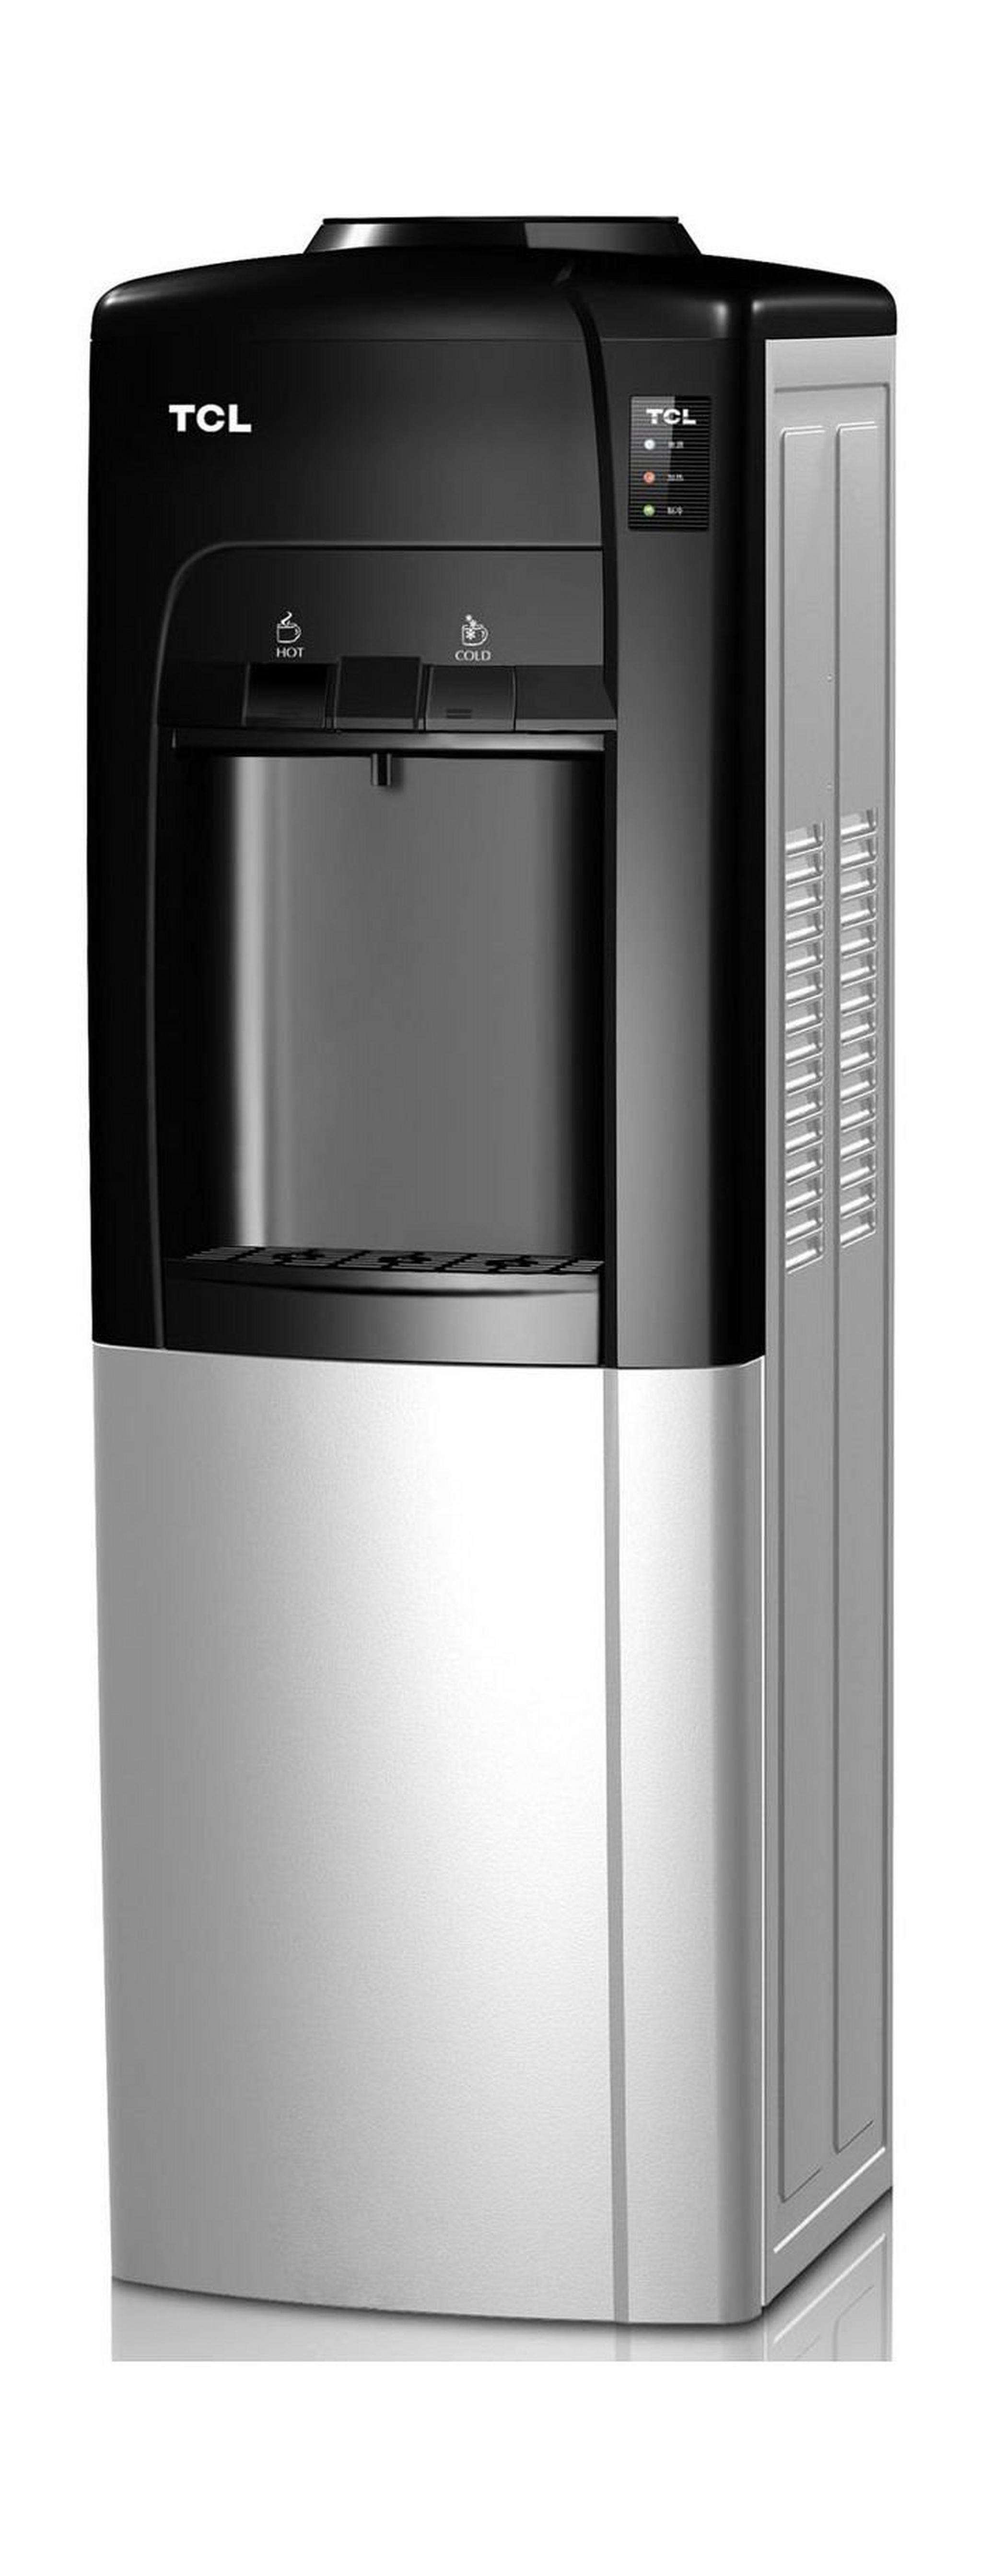 TCL Water Dispenser Fashion Push Design with Fridge (TY-LYR11B) – Black / Silver